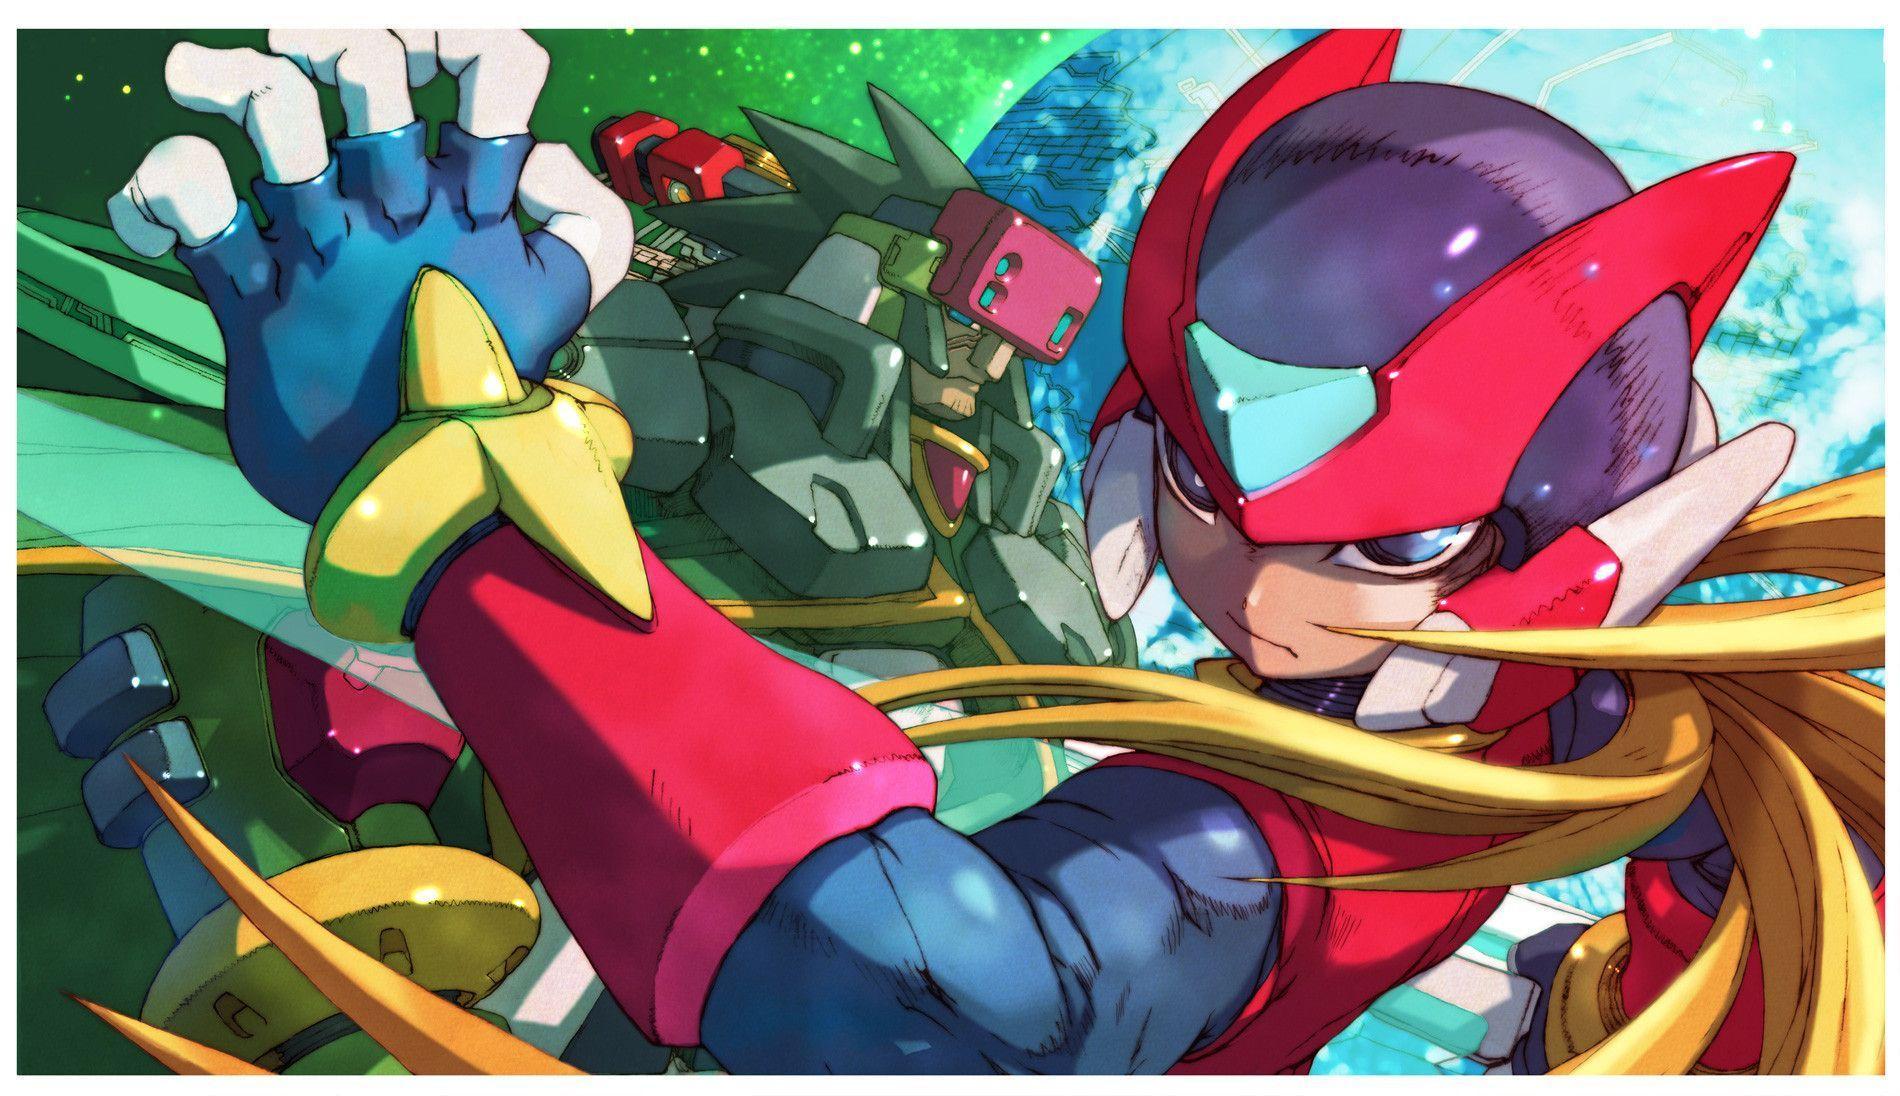 image For > Megaman Zero Wallpaper